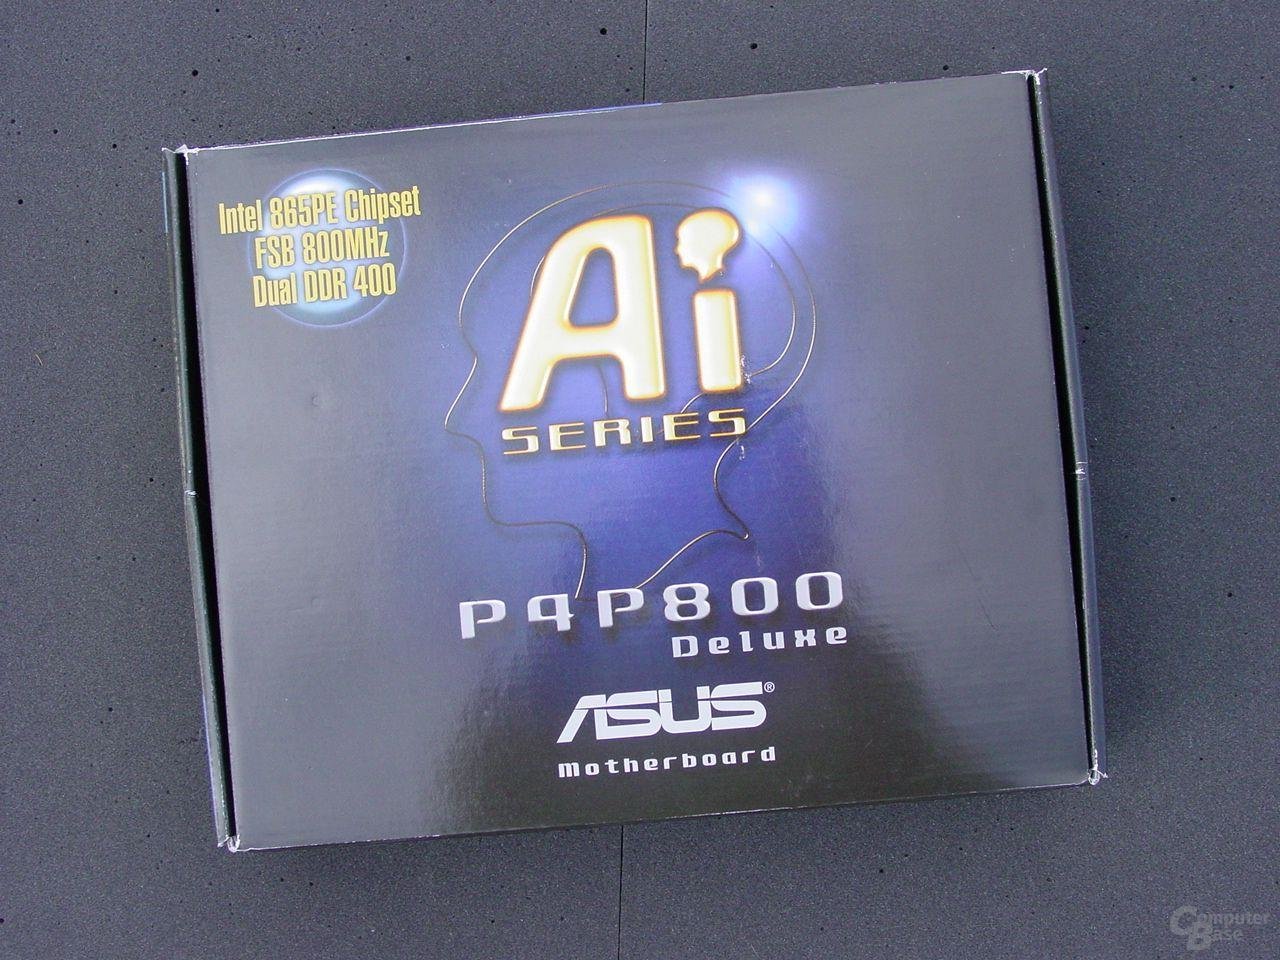 Asus P4P800 Deluxe